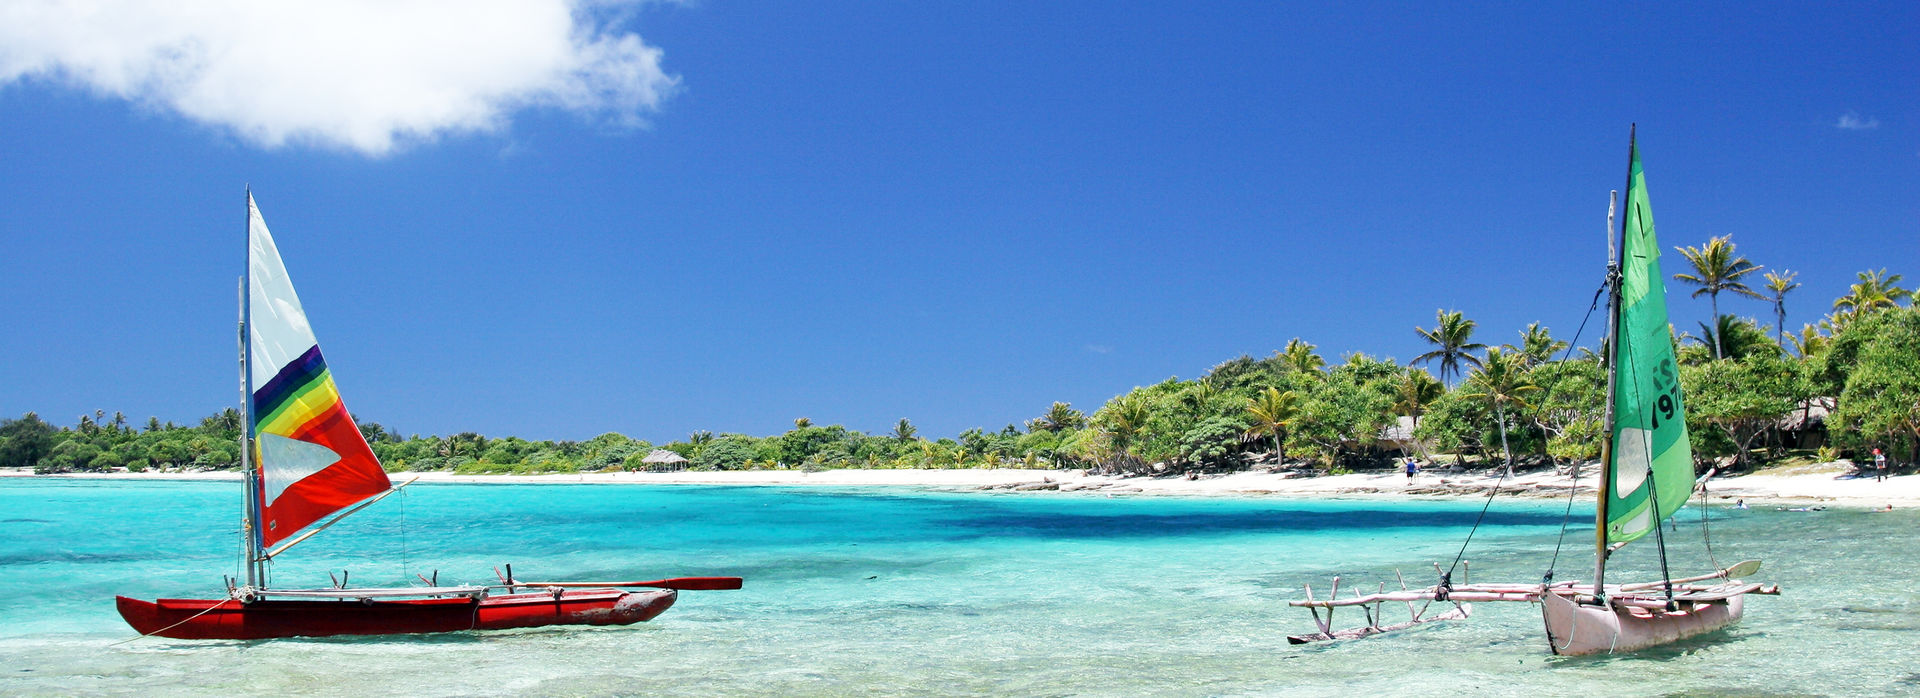 Pacific Islands: Vanuatu